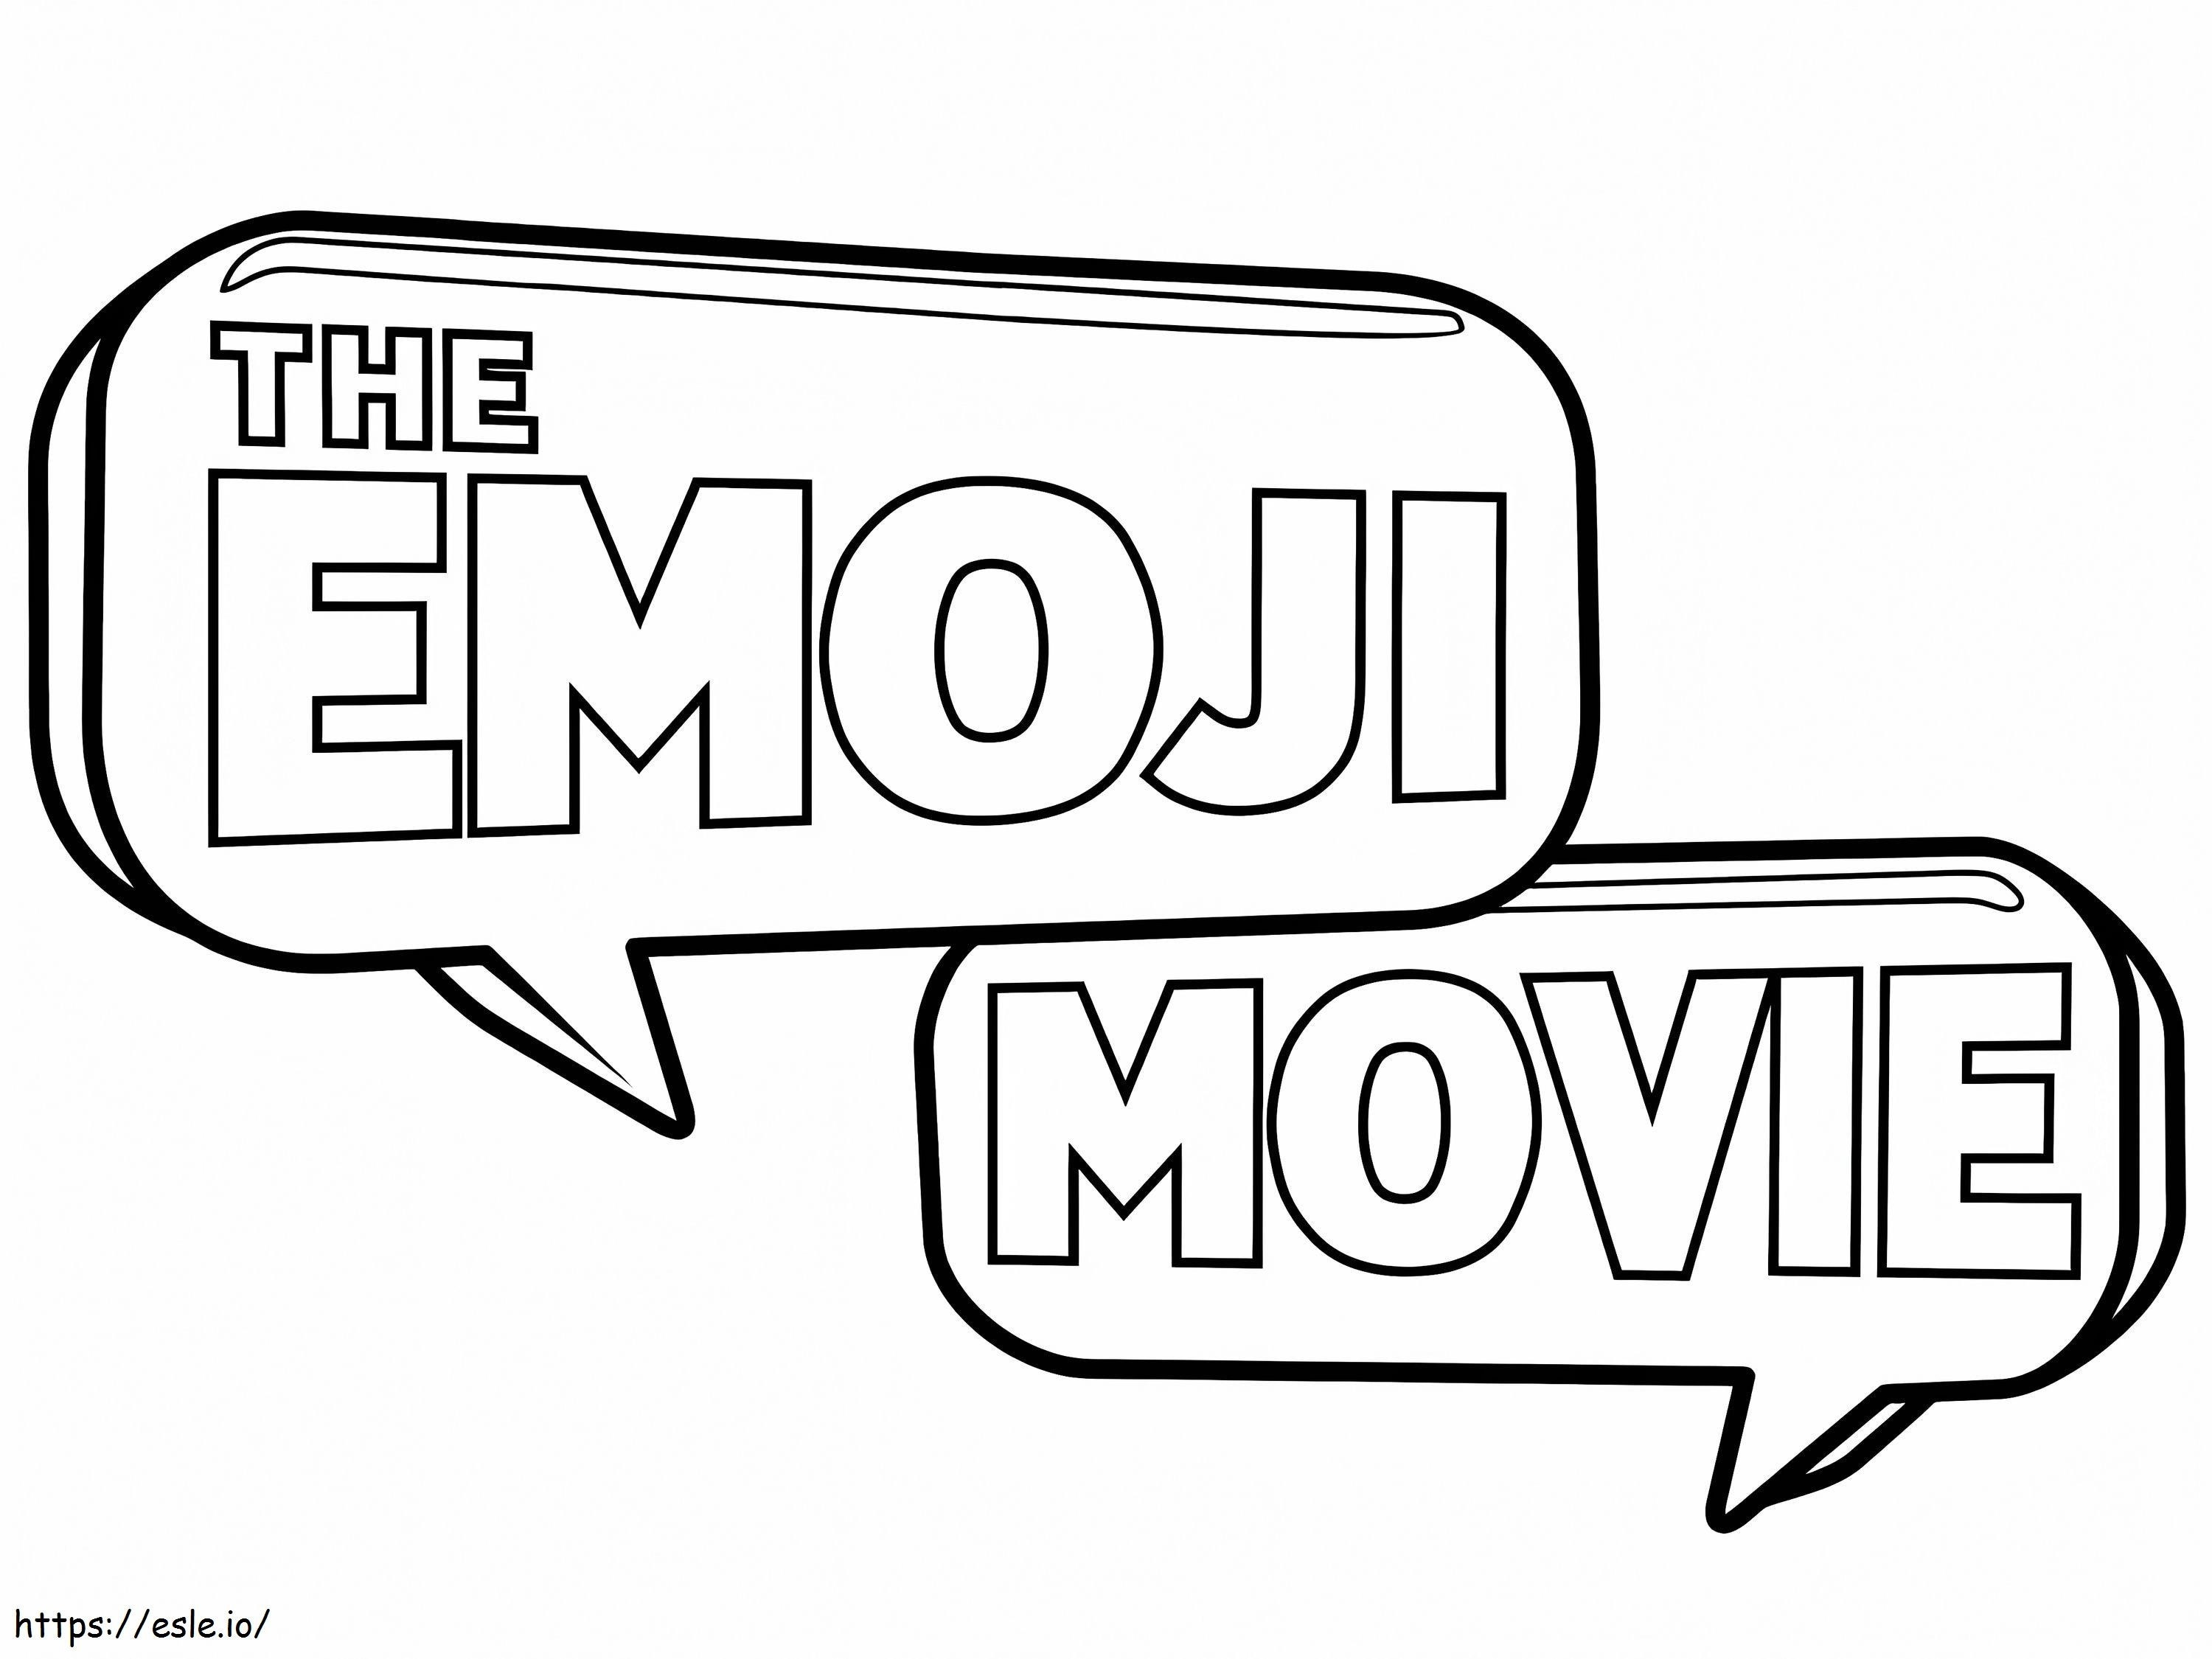 The Emoji Movie Logo coloring page